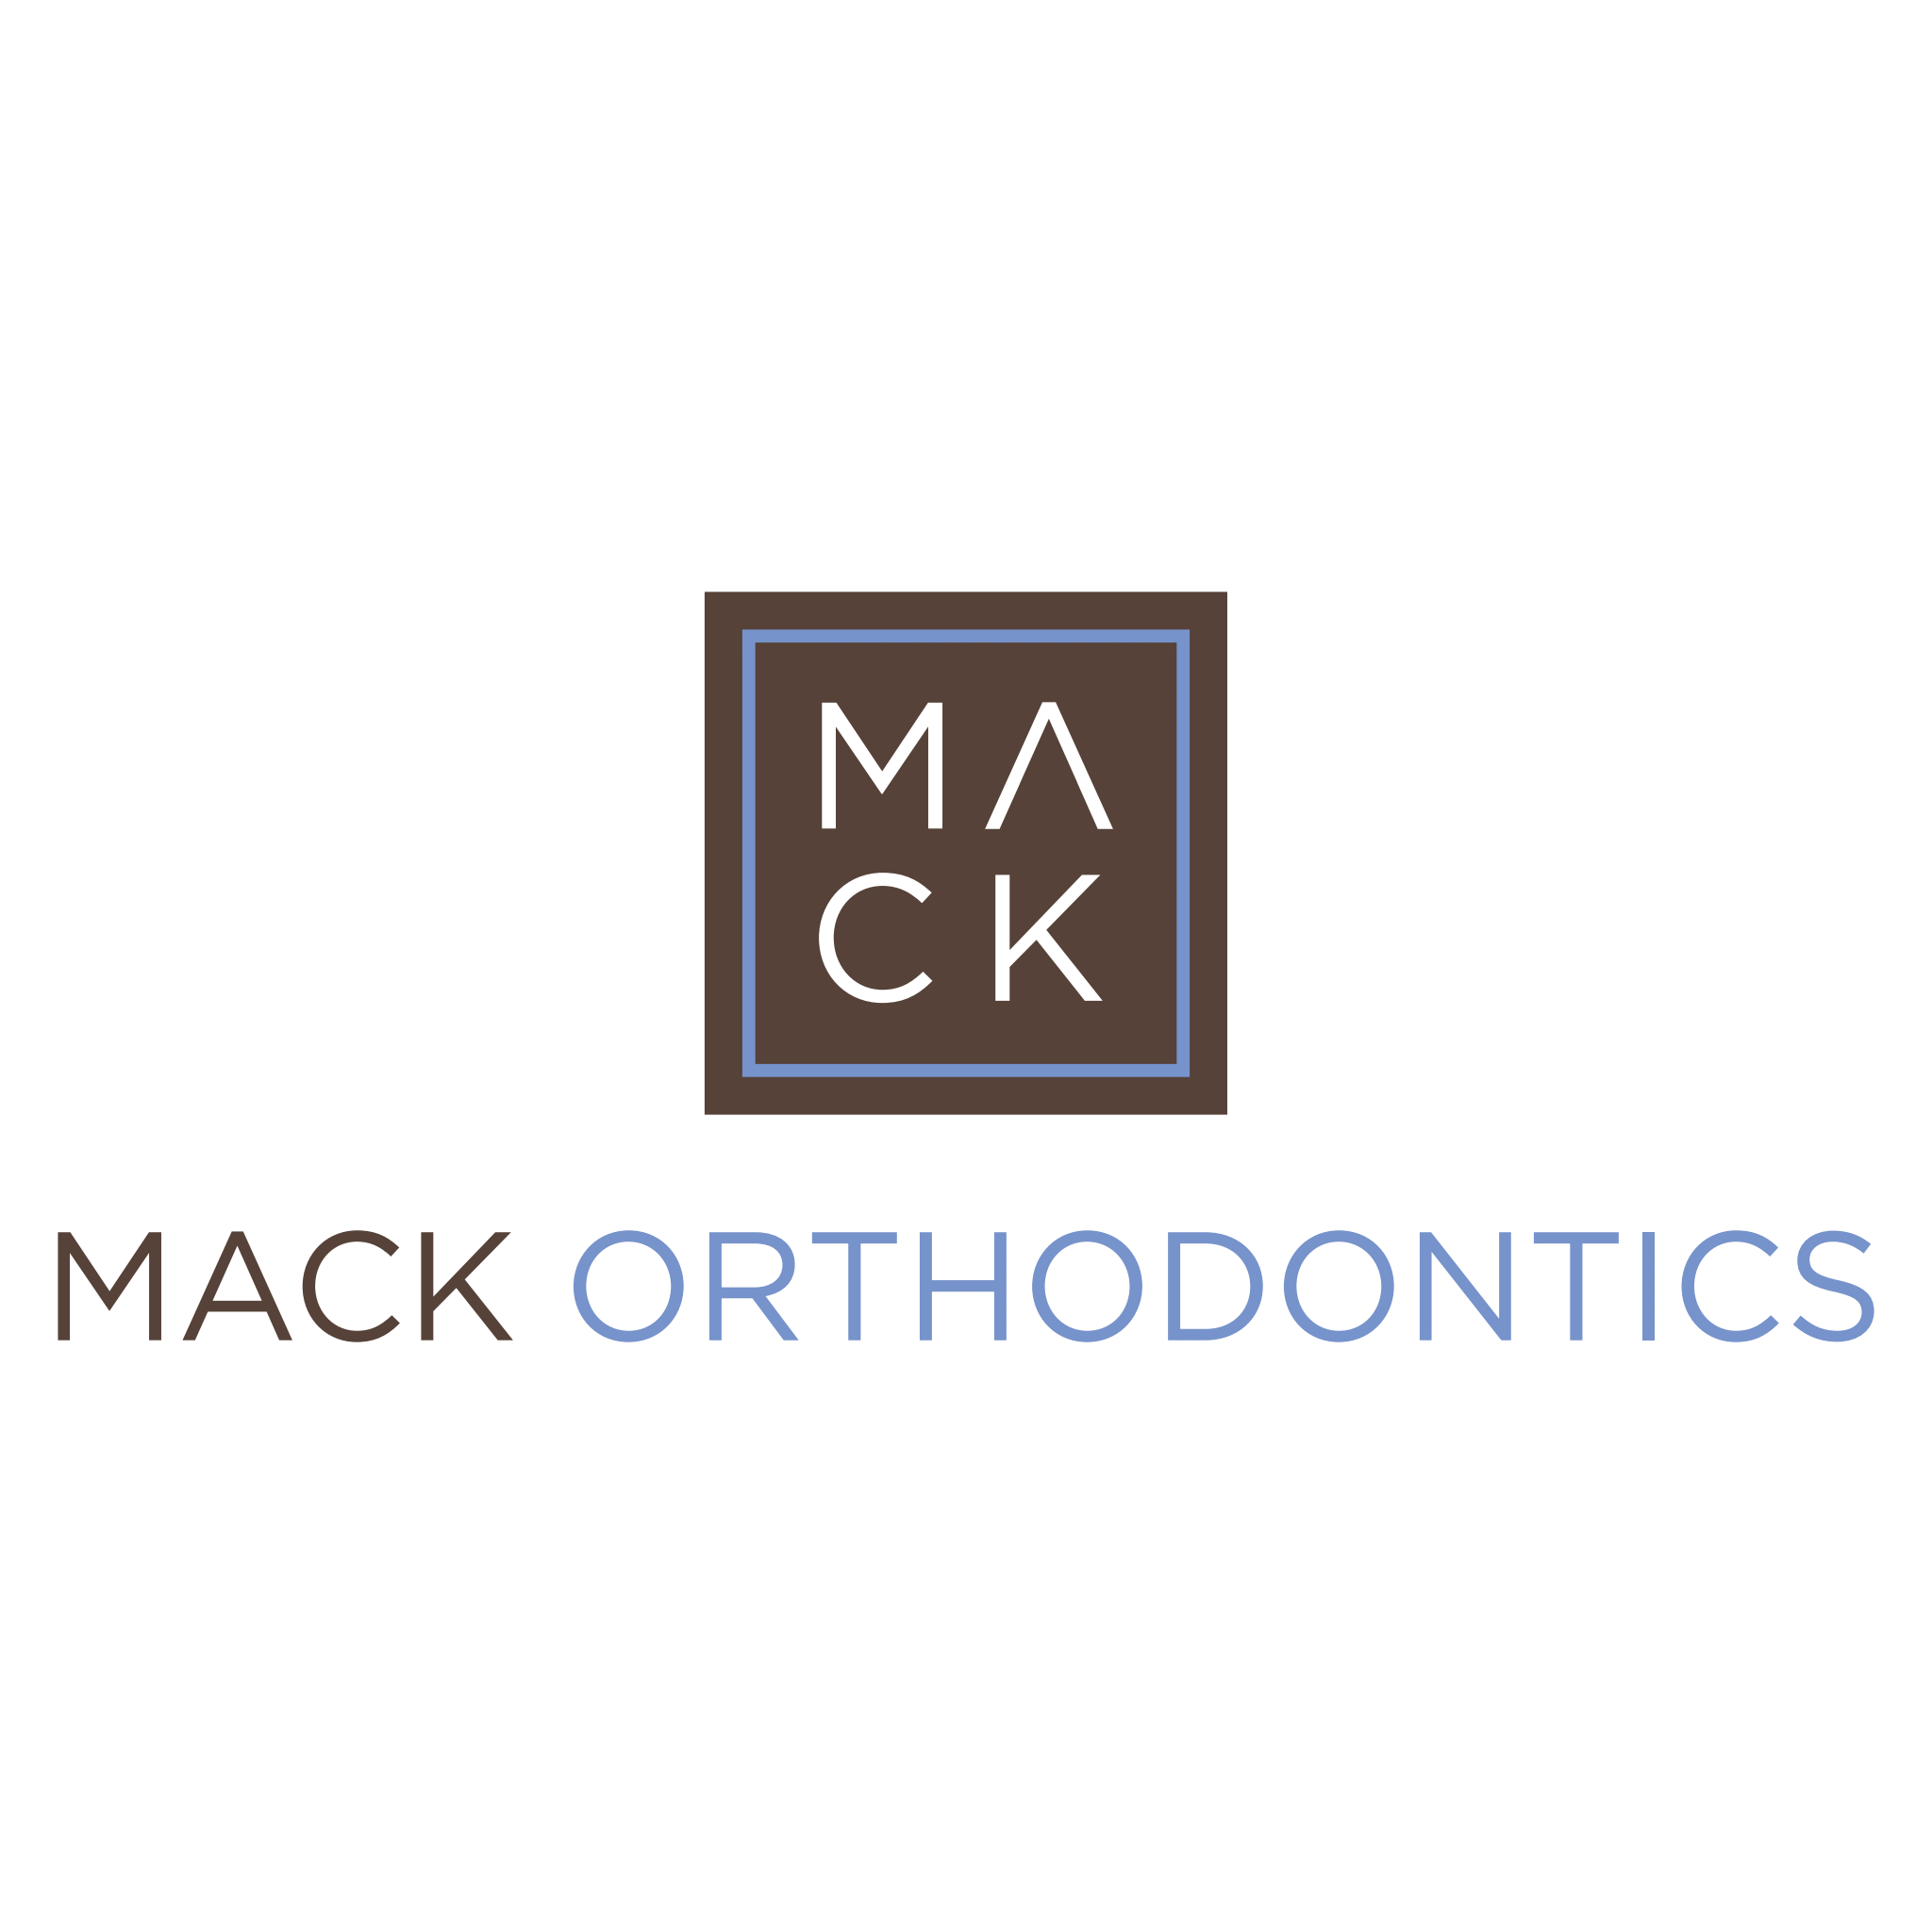 Mack Orthodontics - Hillsborough, NC 27278 - (919)241-4703 | ShowMeLocal.com